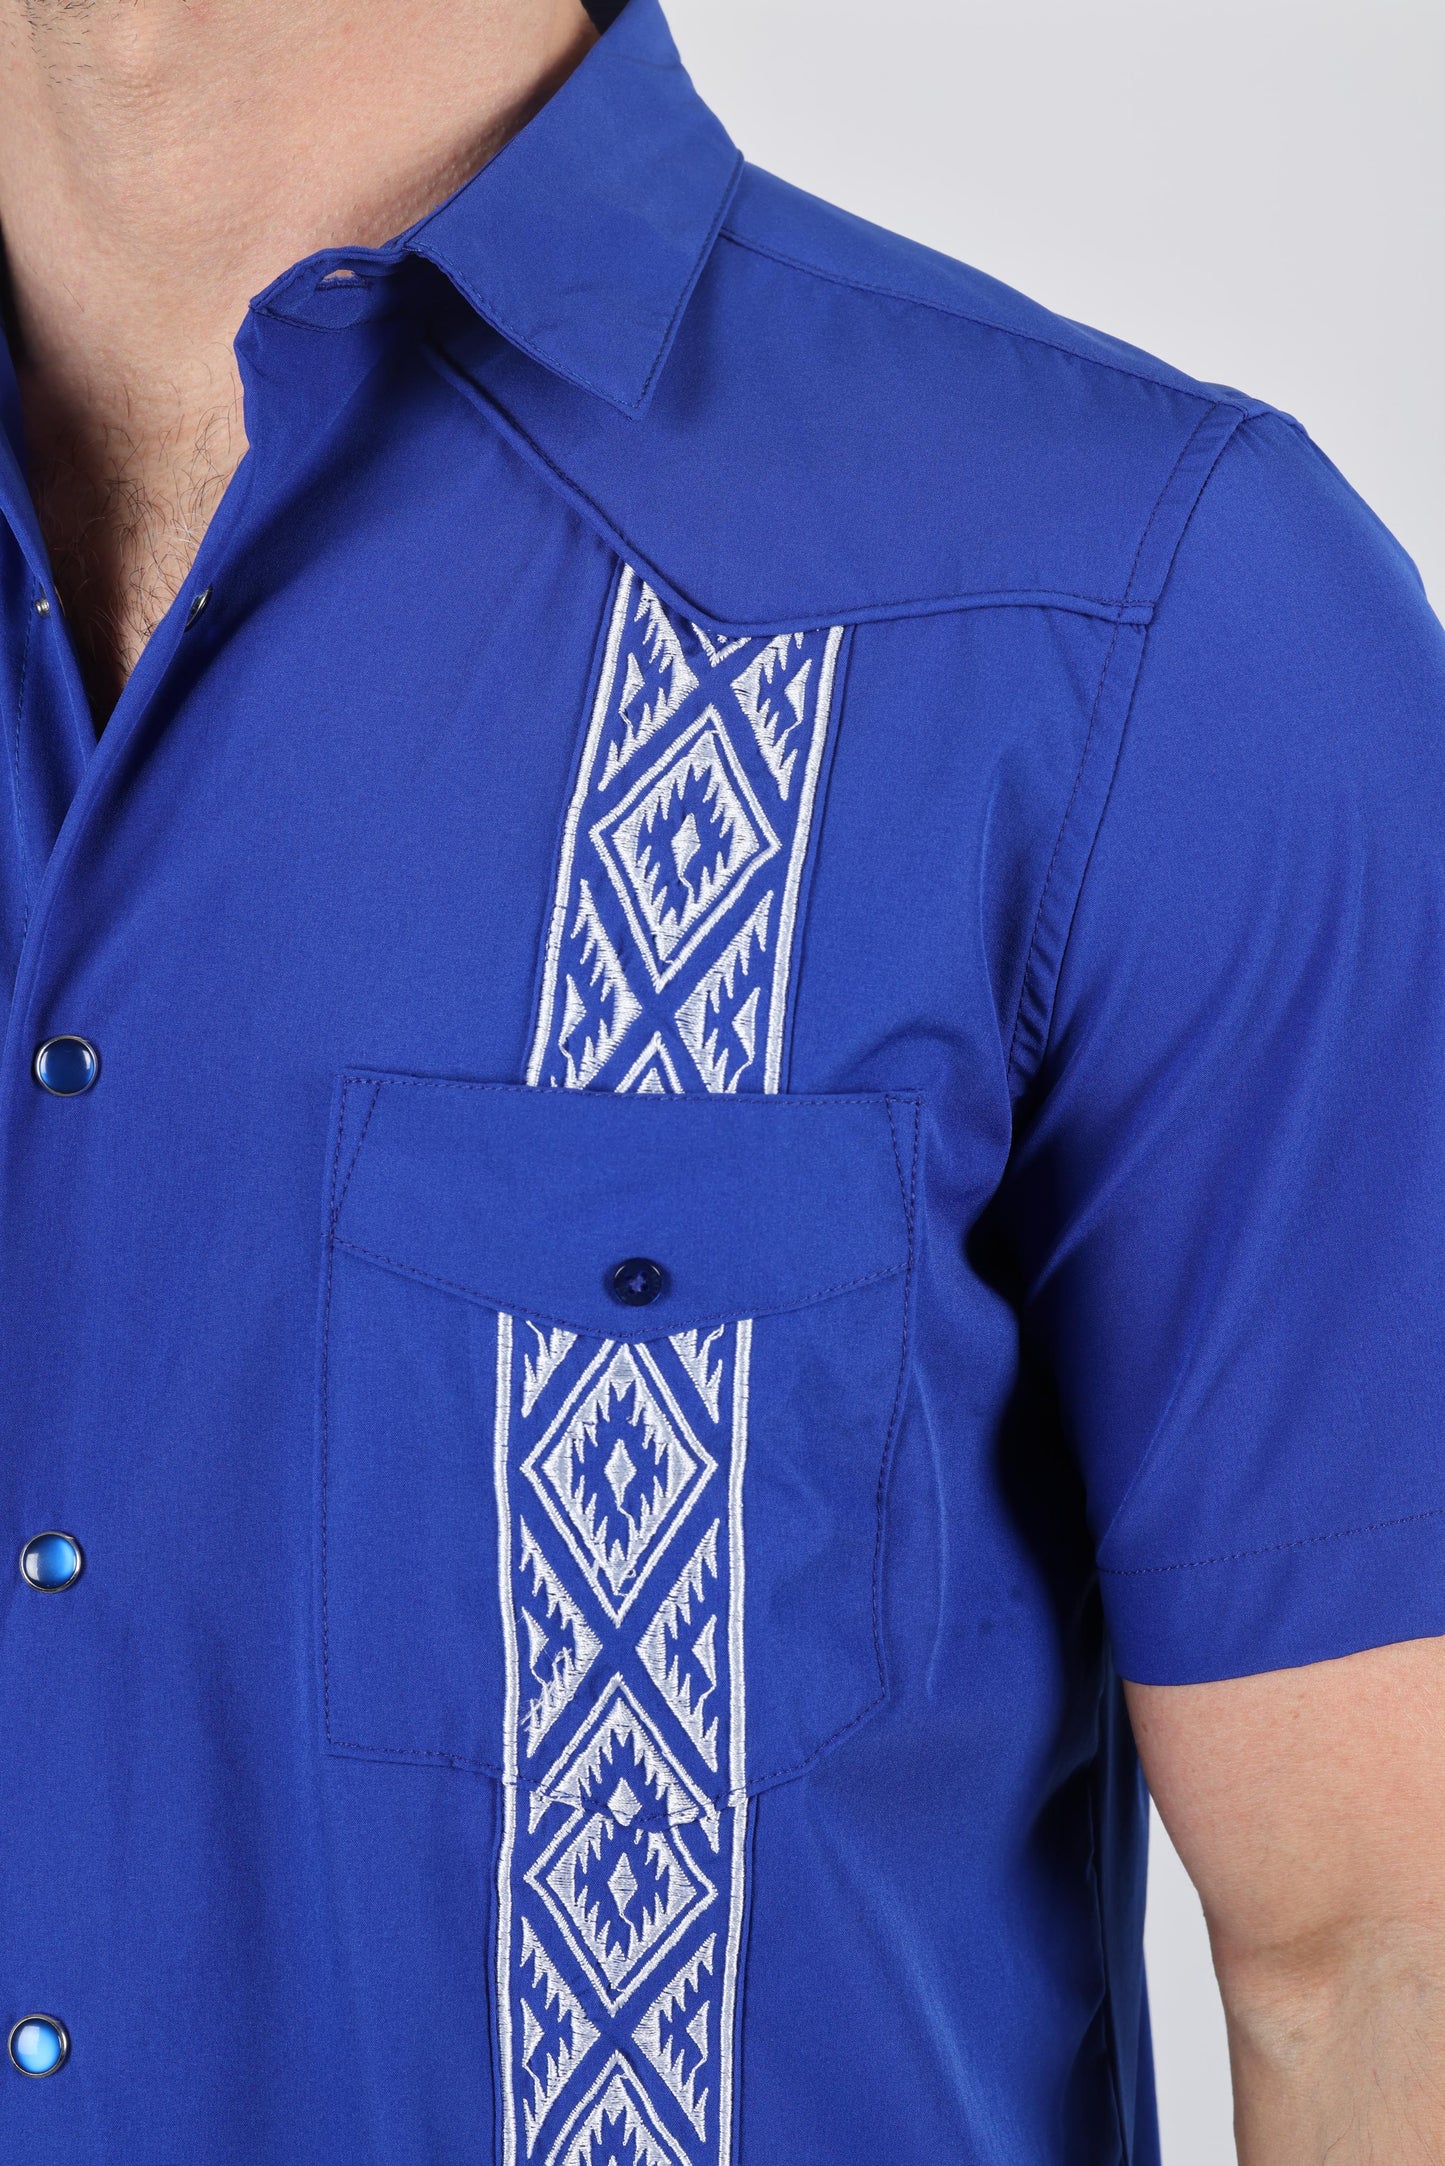 Men's Modern Royal Blue GUAYABERA Shirt